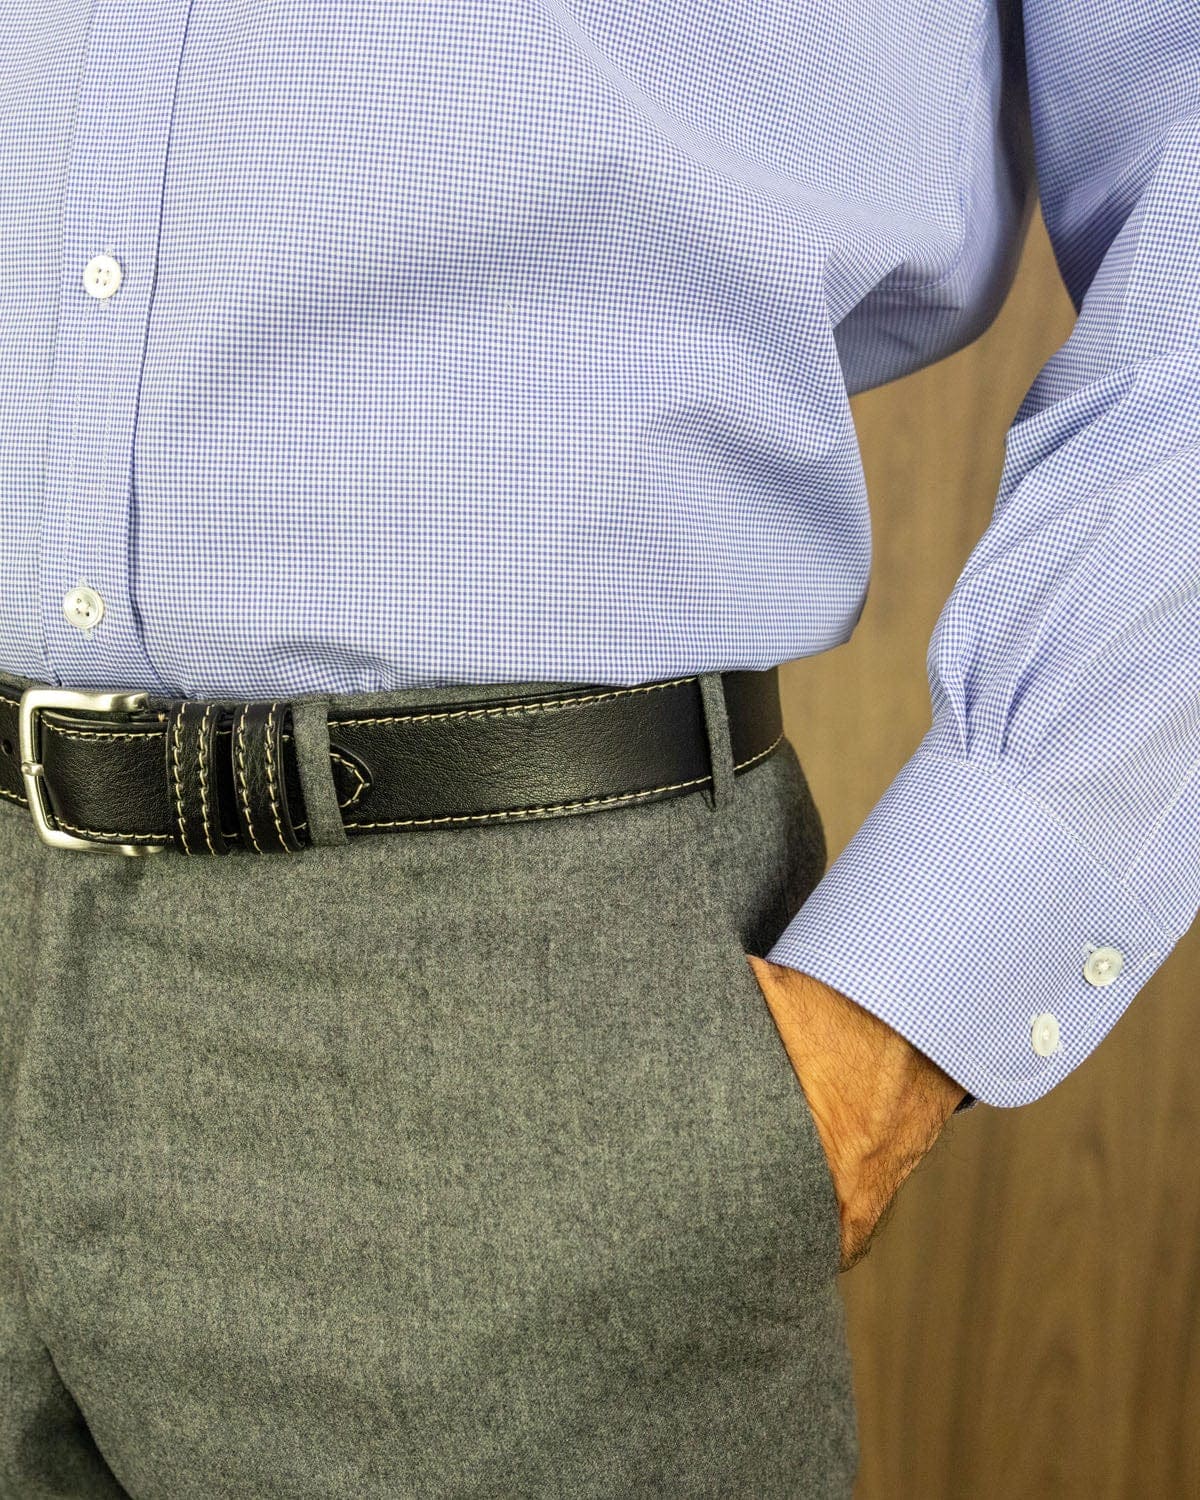 Classic Fit, Cutaway Collar, 2 Button Cuff Shirt in a Blue & White Shepherds Check Poplin Cotton - Hilditch & Key